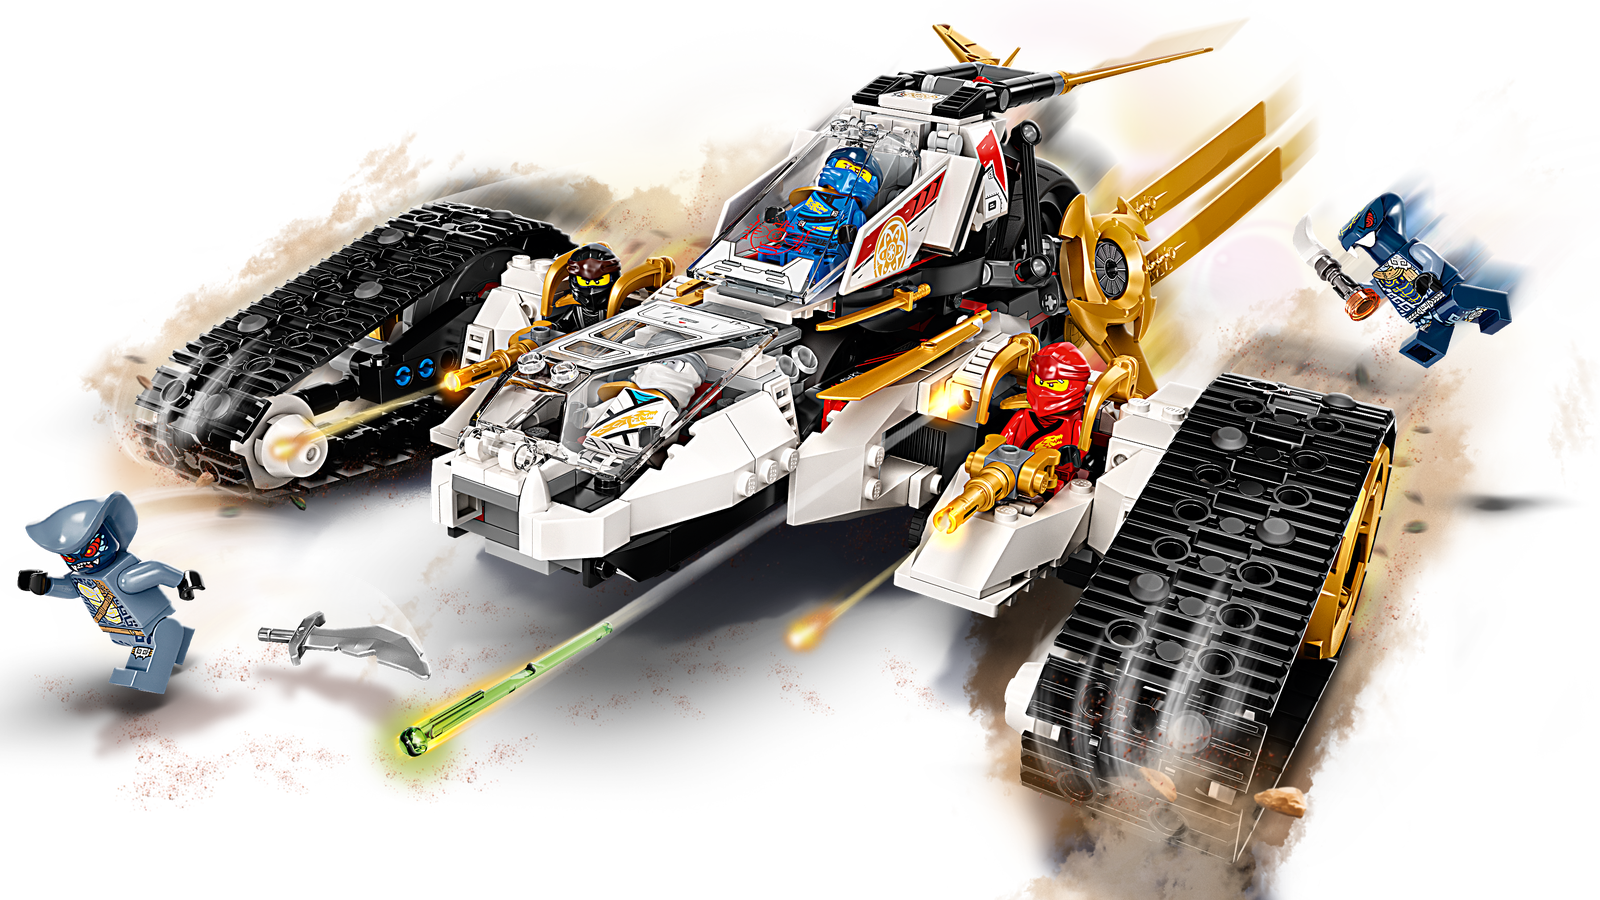 Lego Ninjago Ultra Sonic Raider 71739 - Albagame